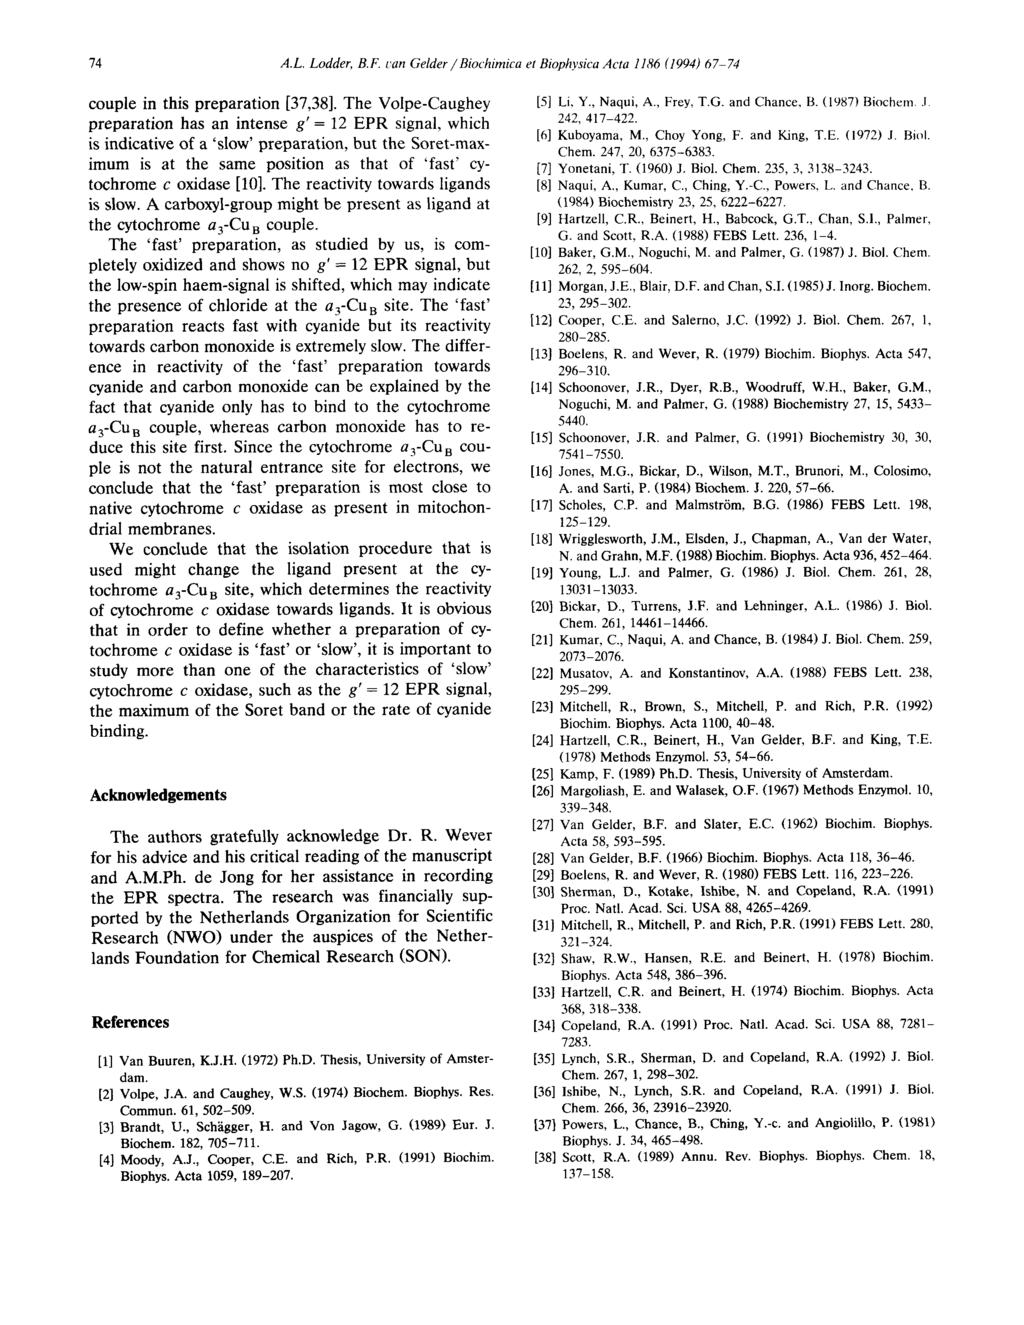 74 A.L. Lodder, B.F. uan Gelder / Biochimica et Biophysica Acta 1186 (1994) 67-74 couple in this preparation [37,38].